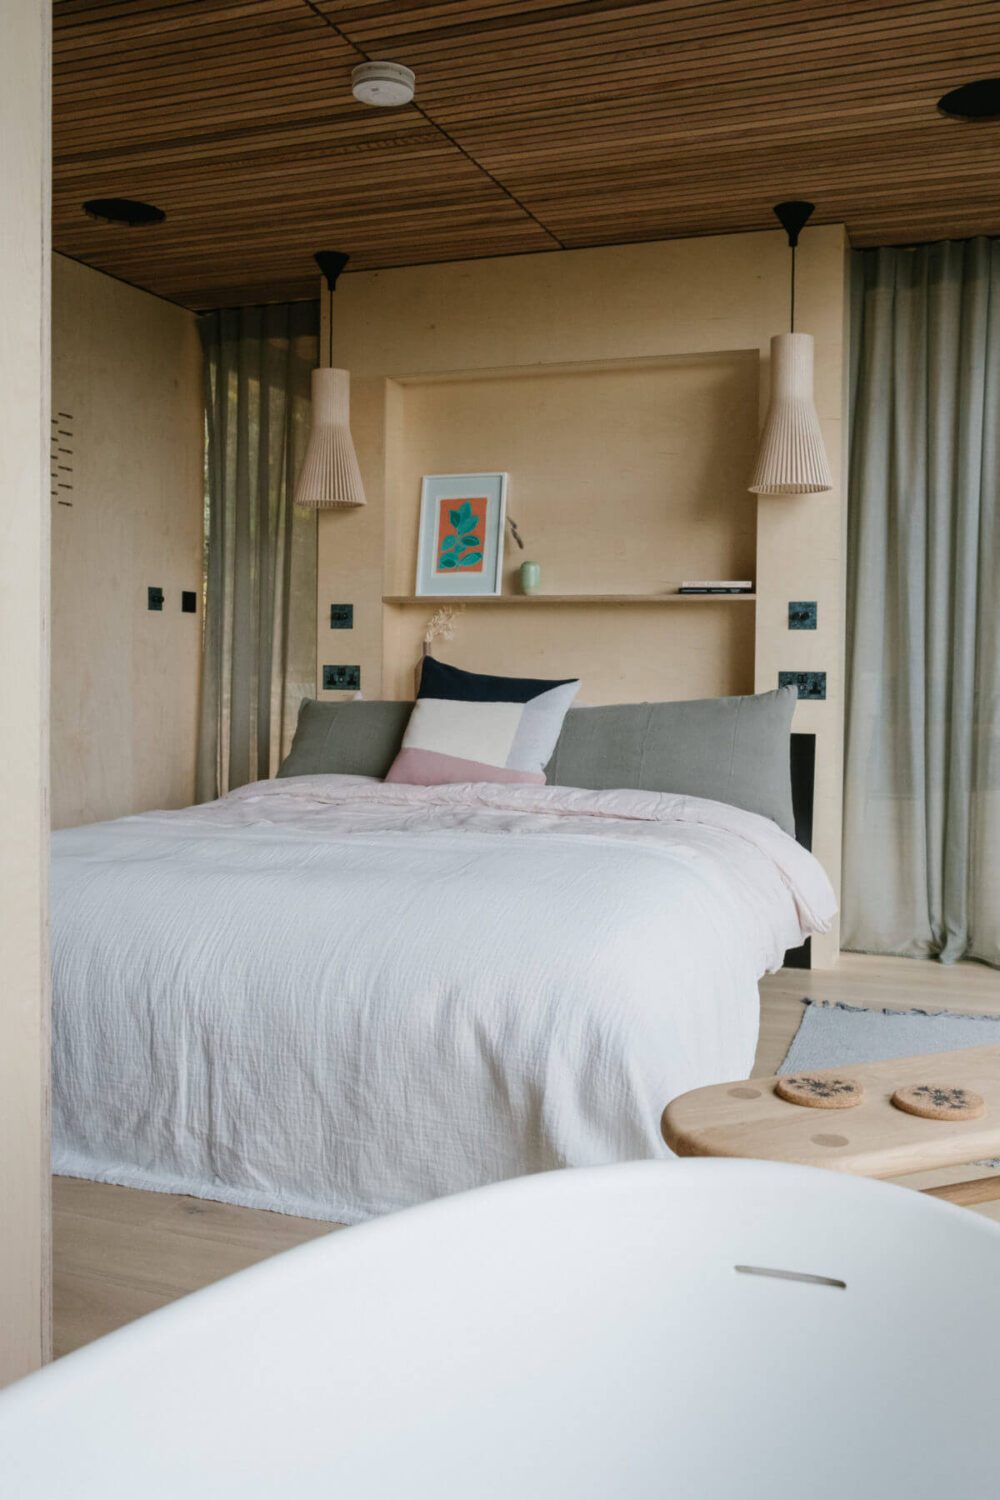 bedroom-ensuite-loft-style-lodge-nordroom